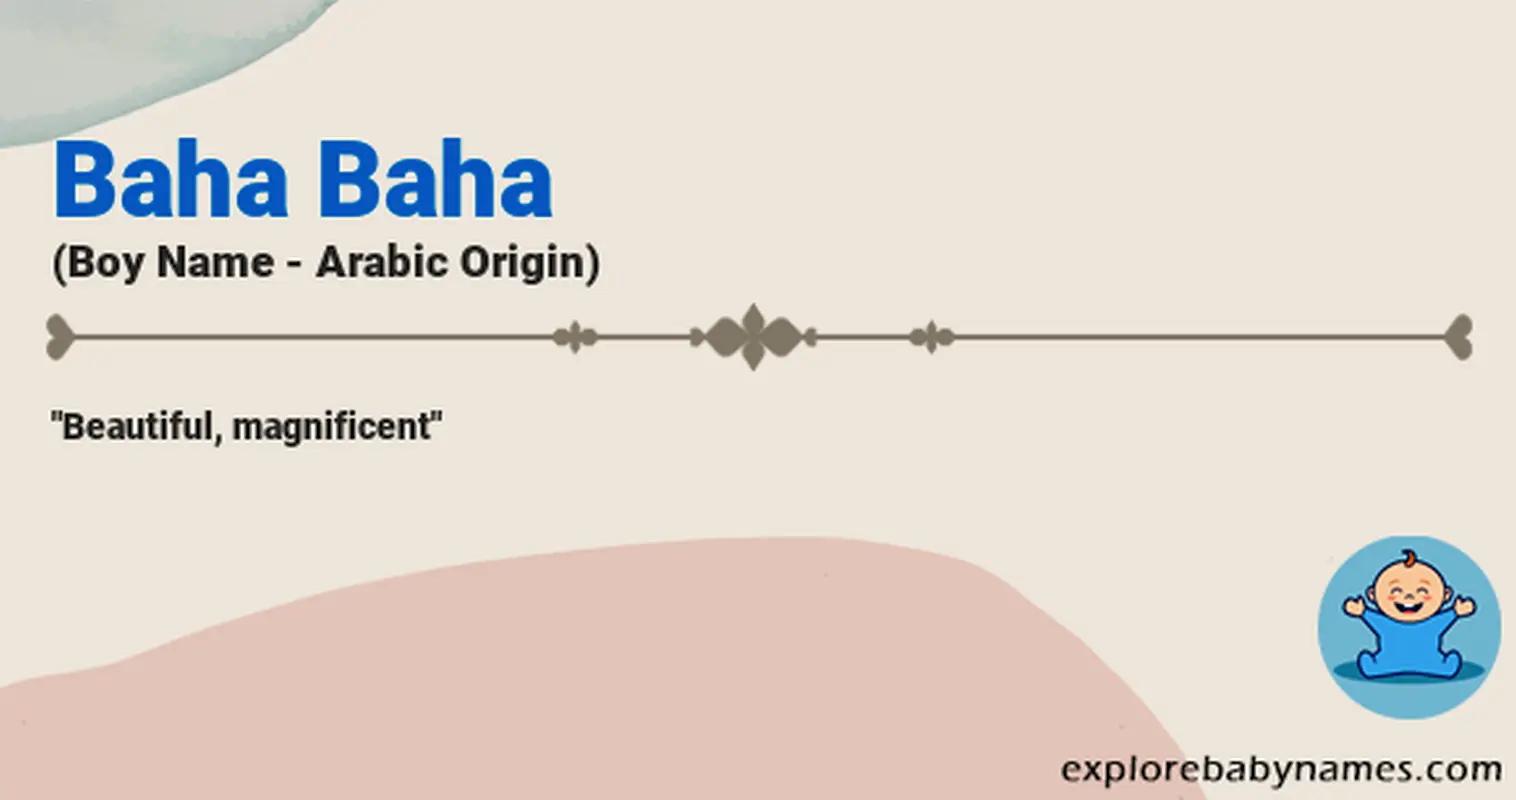 Meaning of Baha Baha